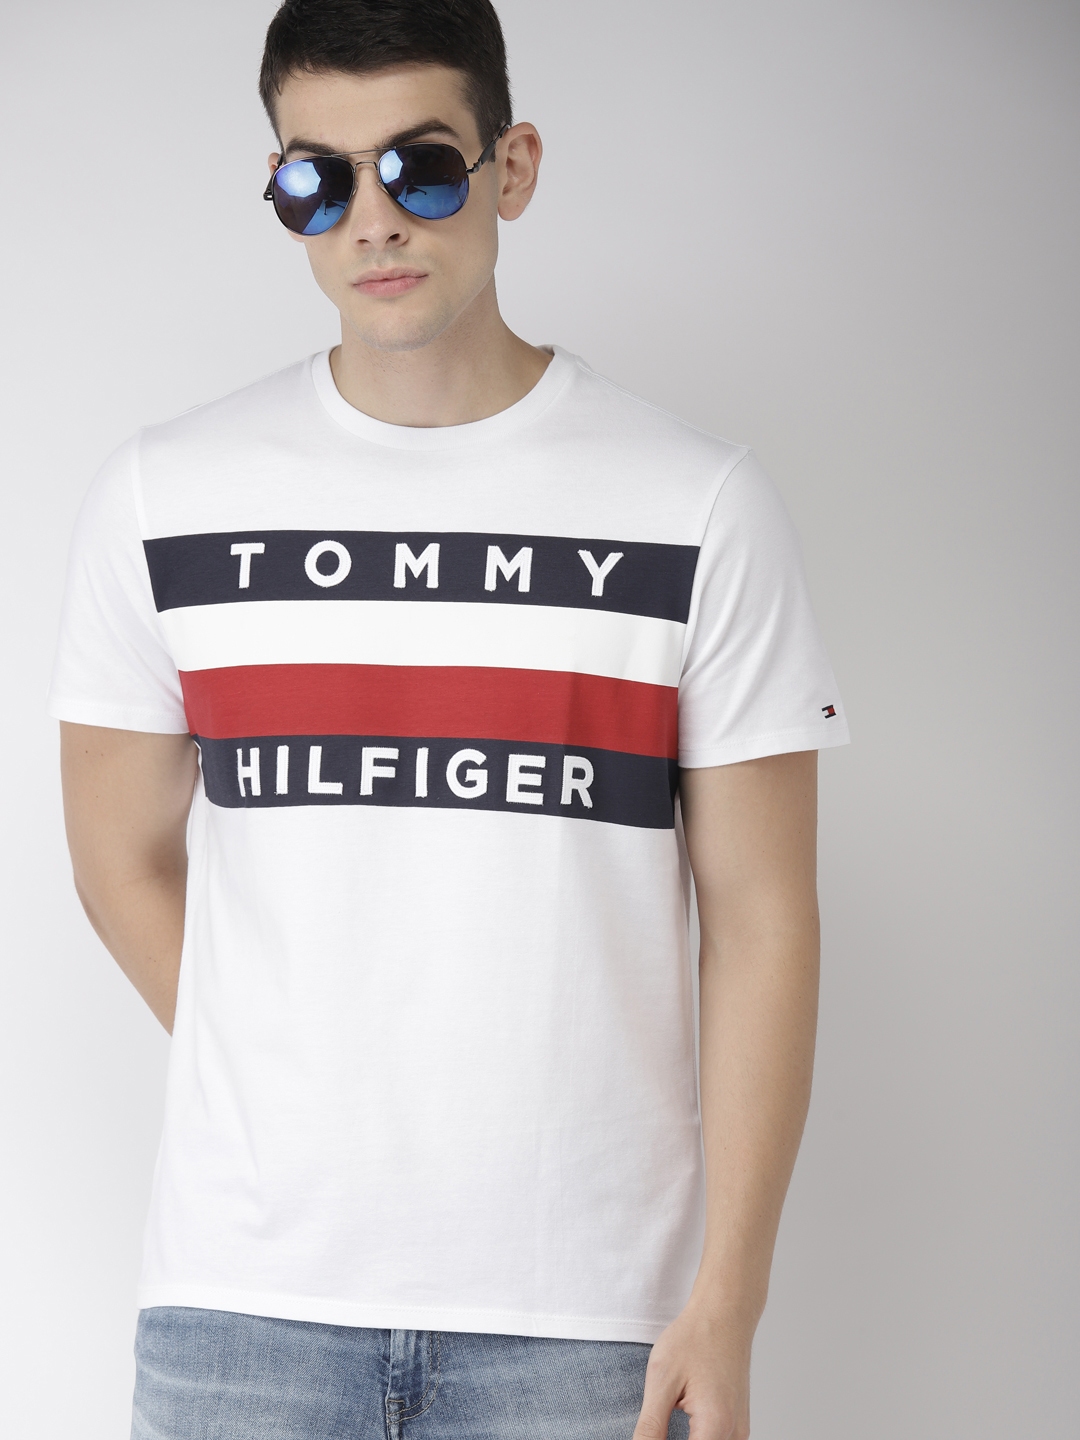 tommy hilfiger t shirt mens white